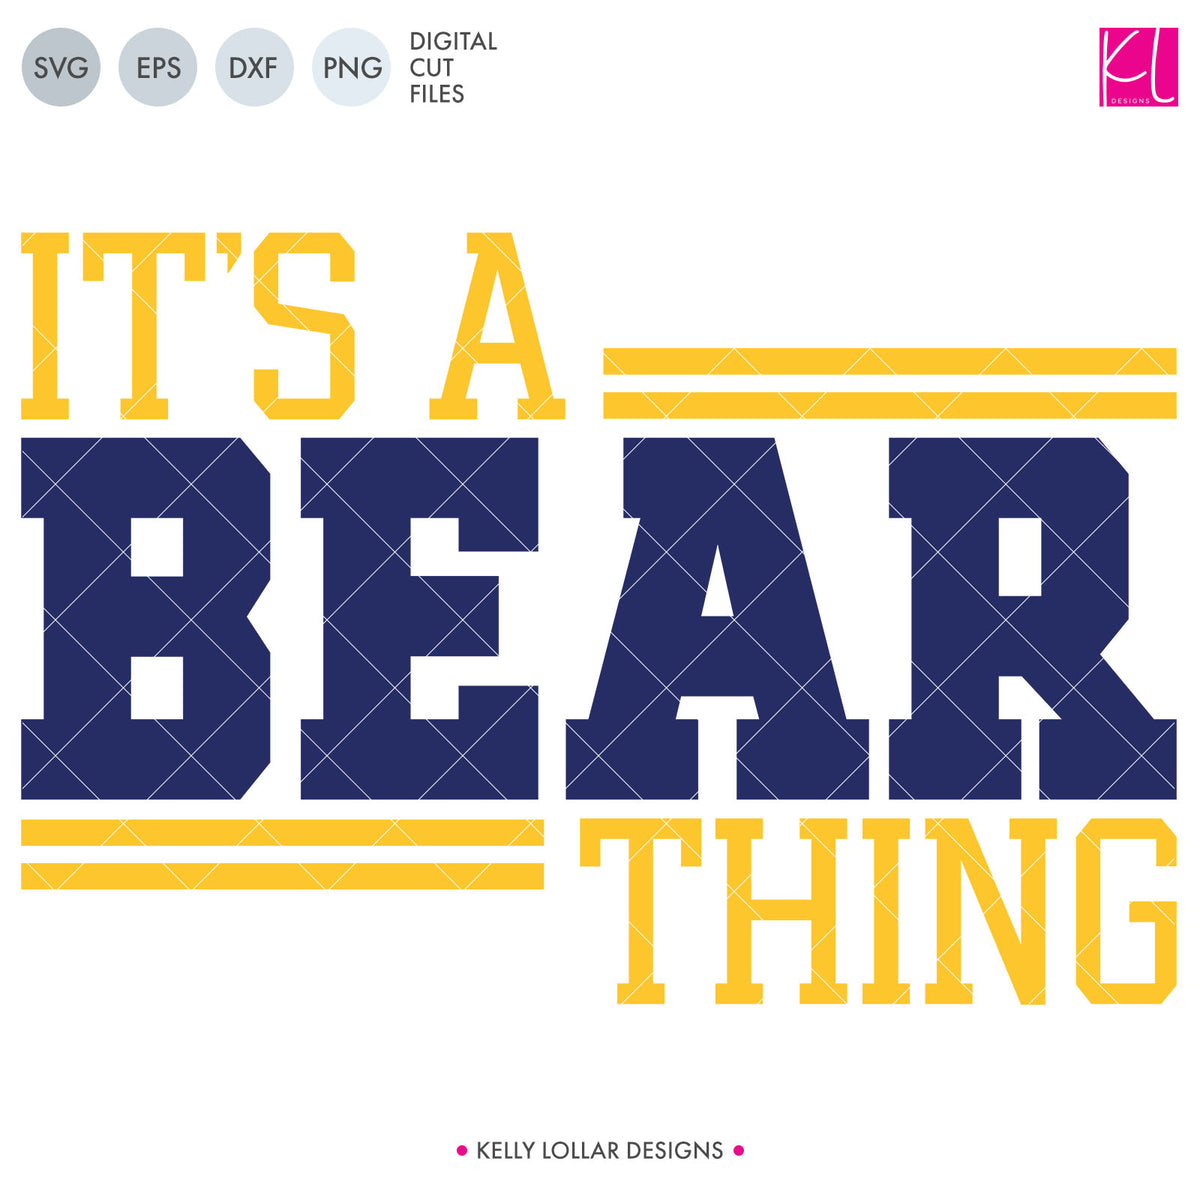 Bears Mascot Bundle | SVG DXF EPS PNG Cut Files